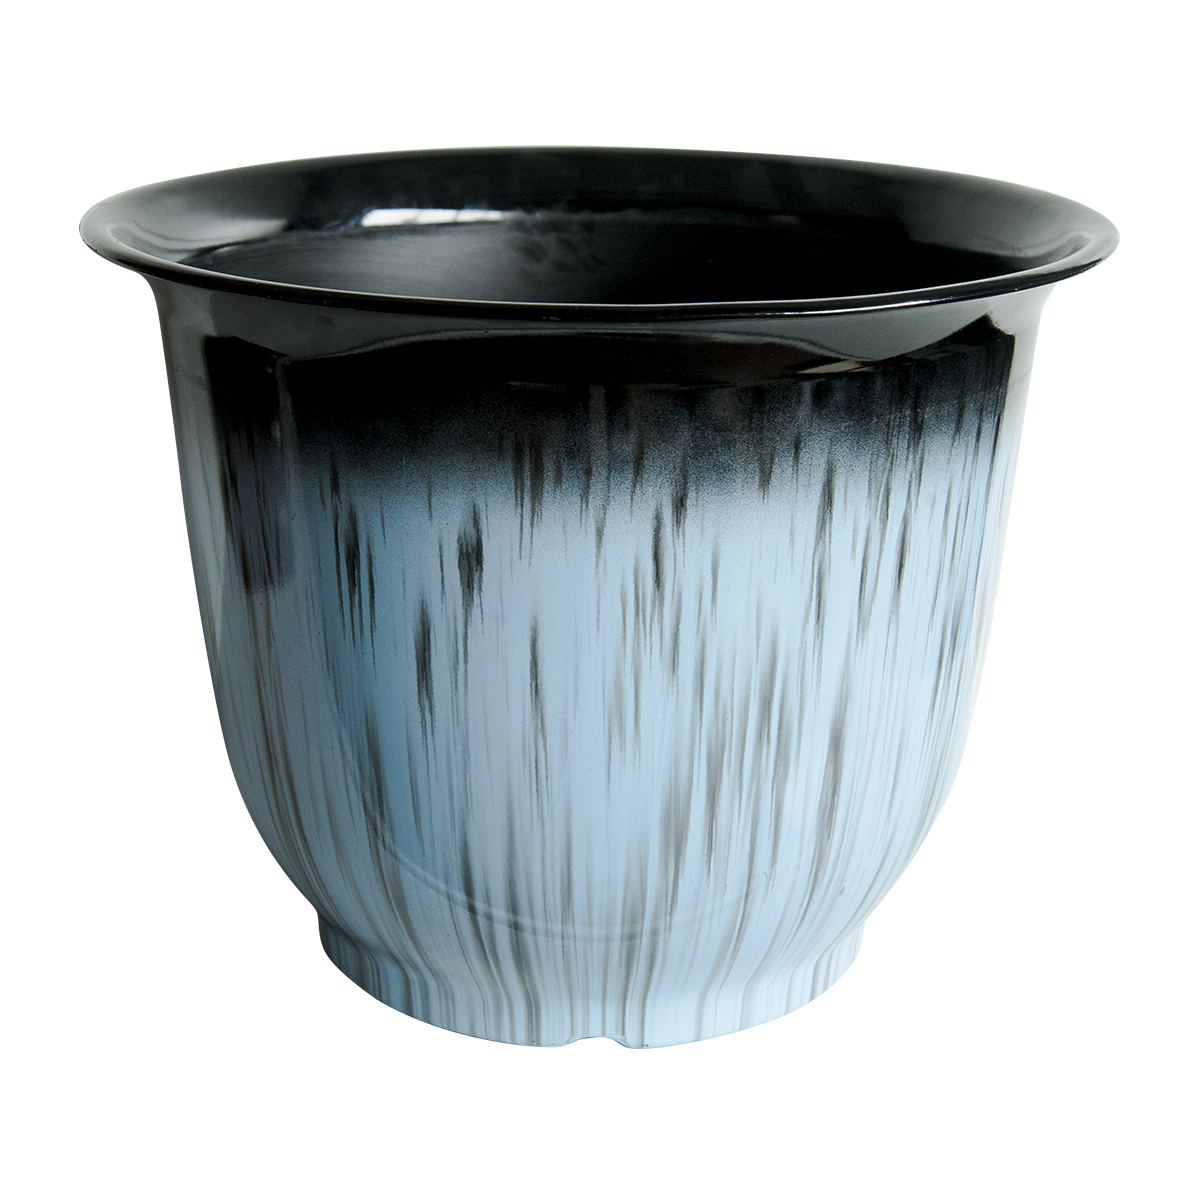 Resin Ceramic Glazed Finish Bell Pot Planters